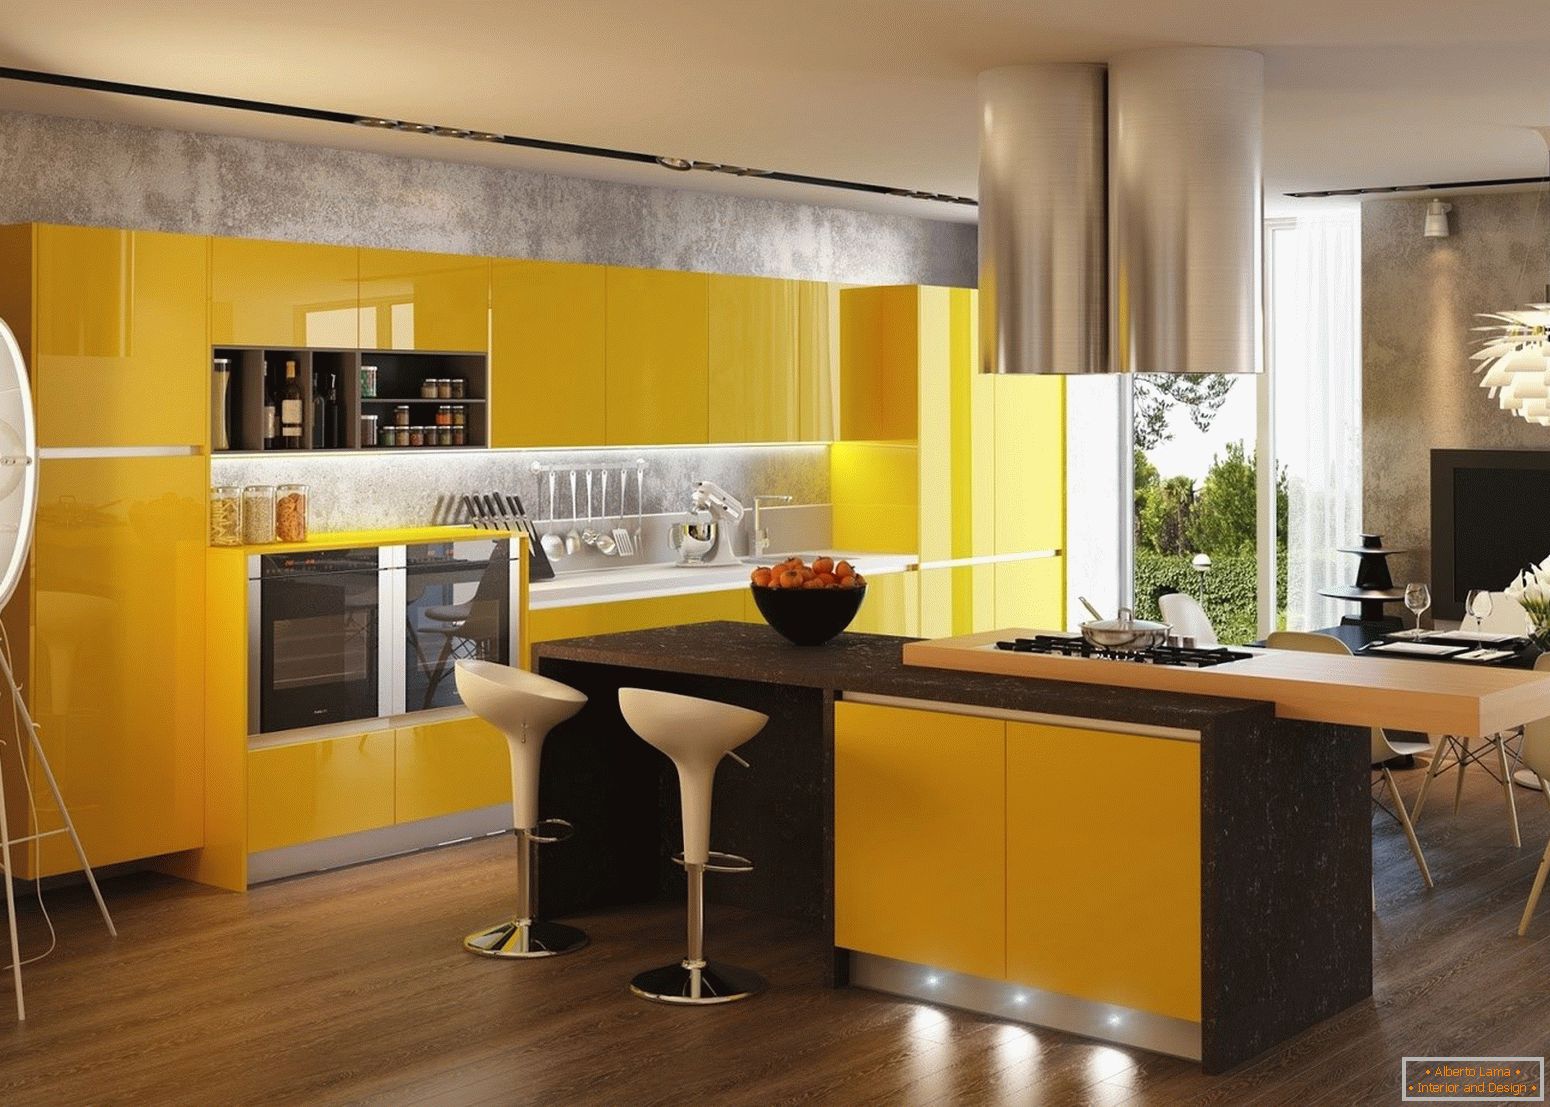 Interior with yellow kitchen